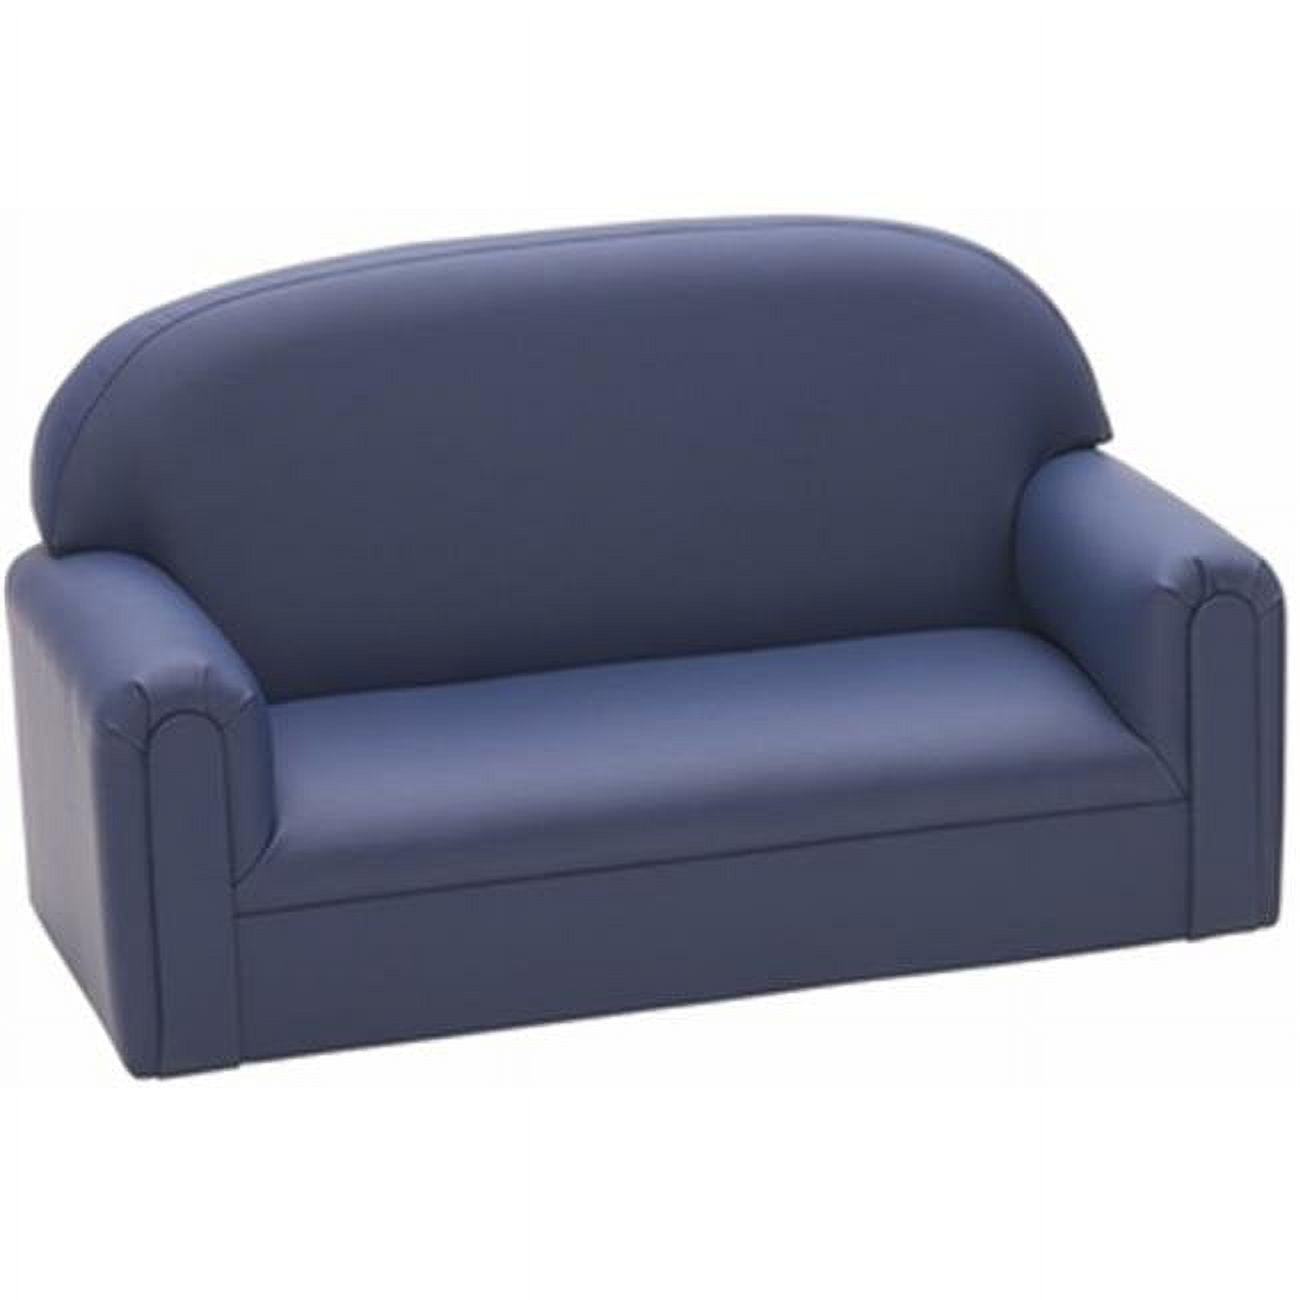 Fi0200-100 Just Like Home Toddler Enviro-child Upholstery Sofa, Deep Blue